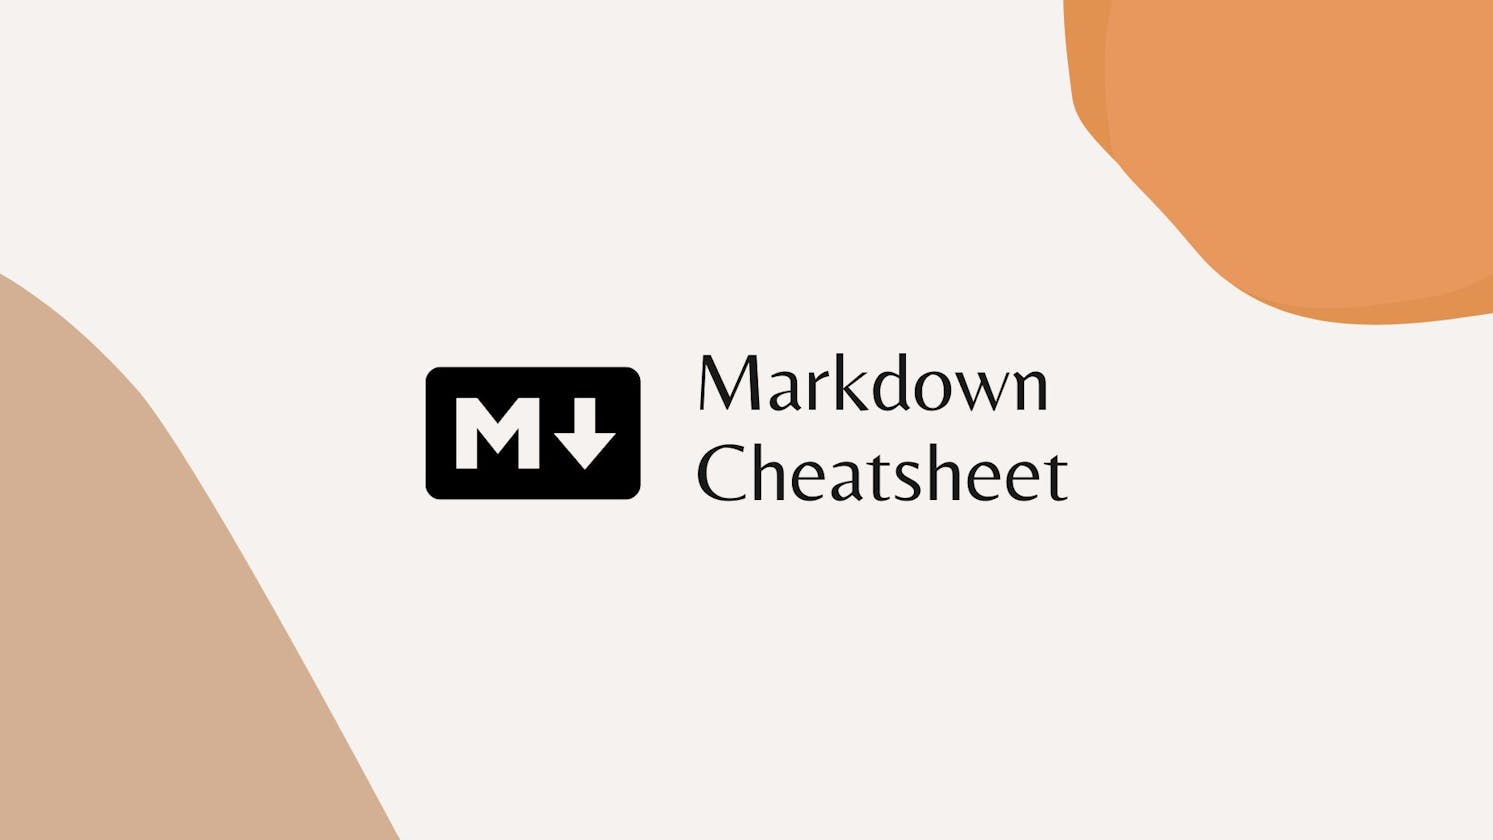 Markdown cheatsheet